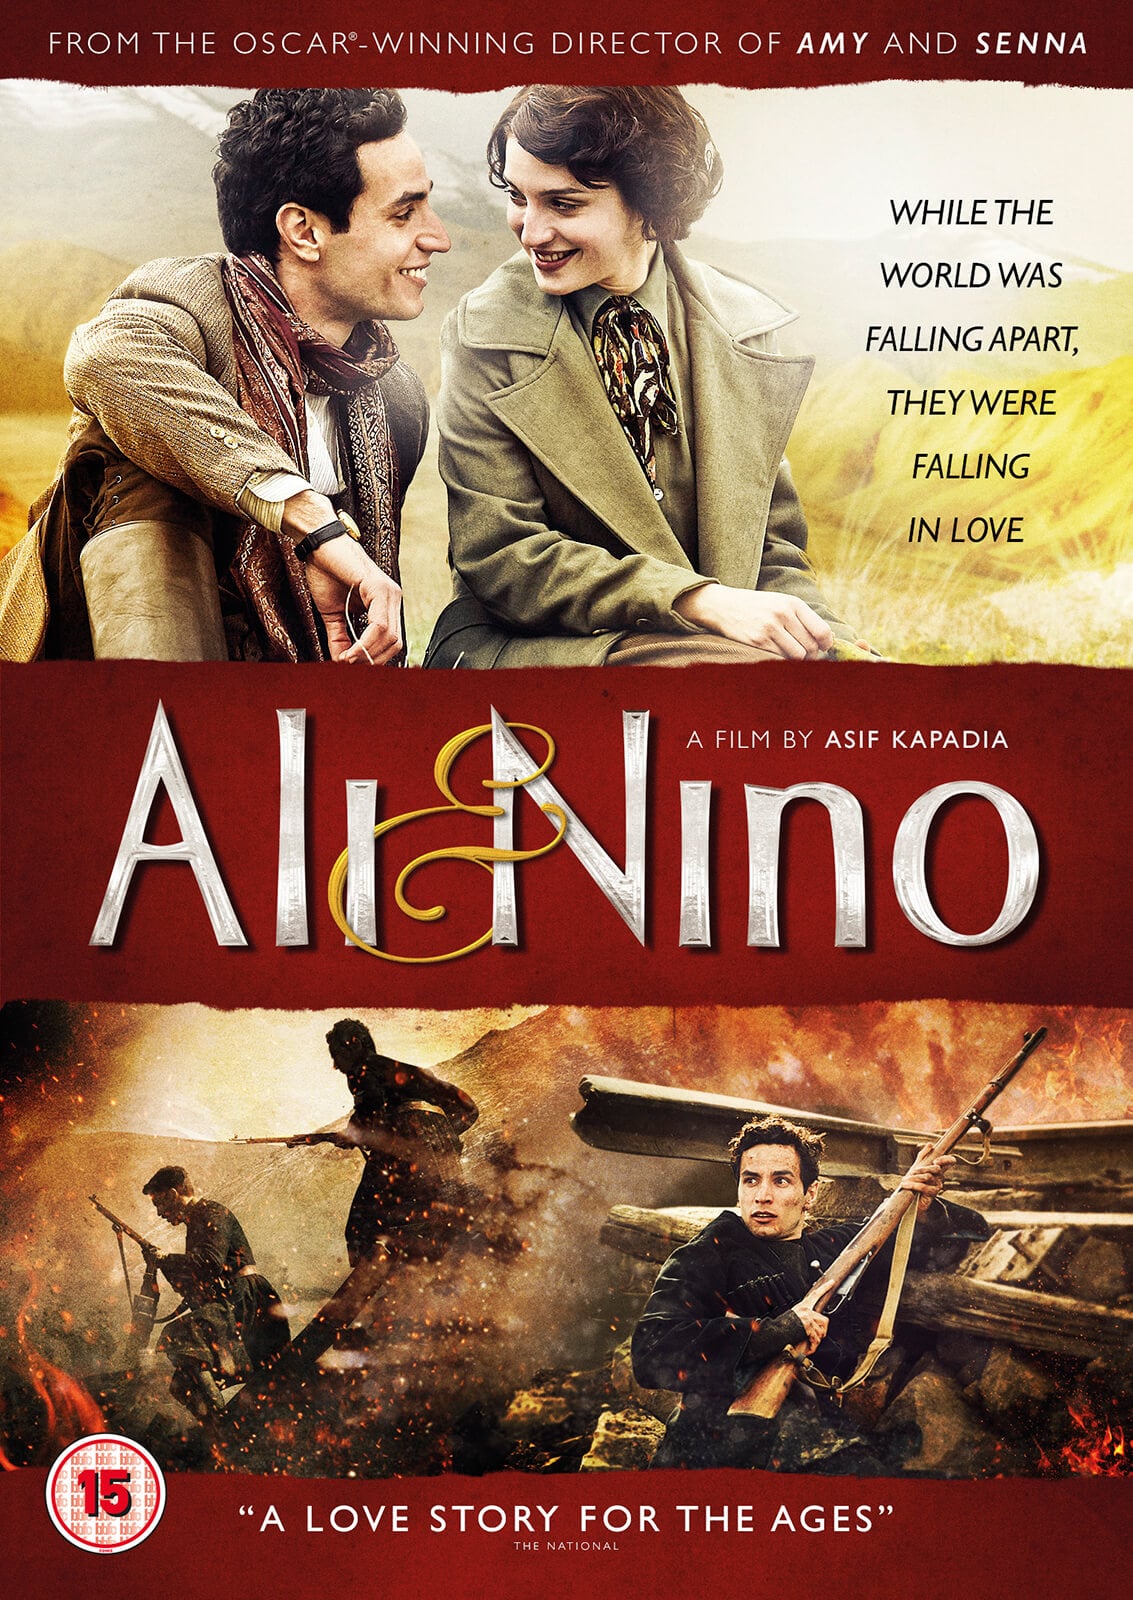 Постер фильма "Али и Нино" .